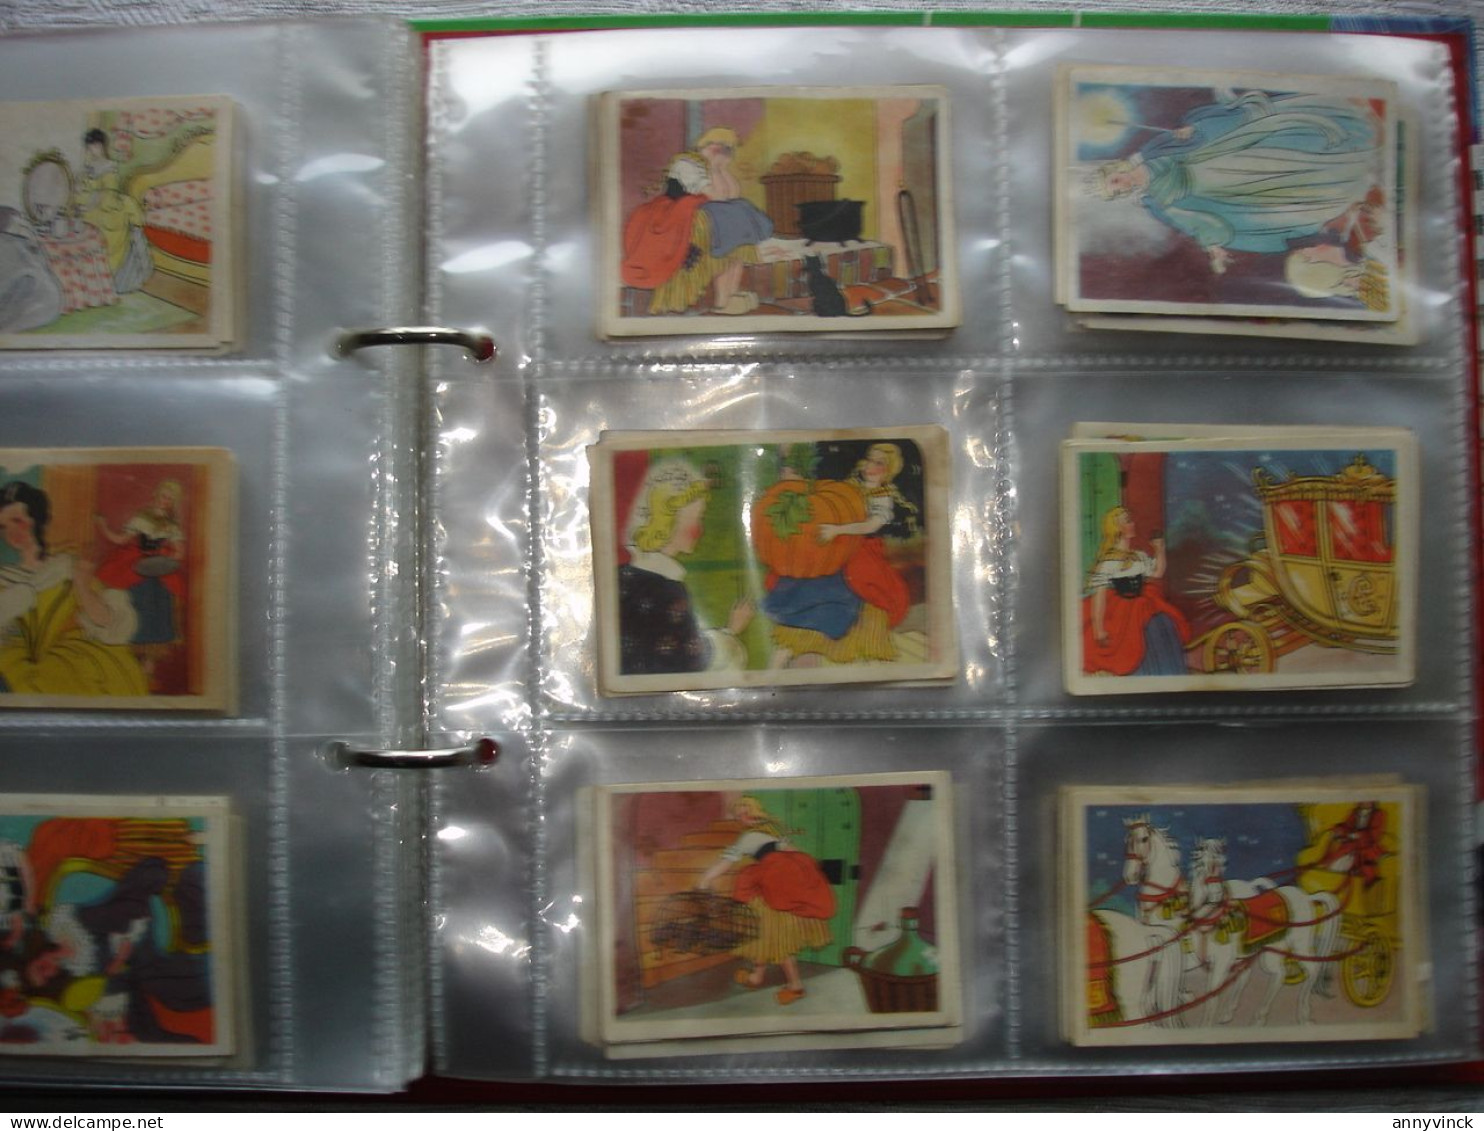 Verzameling prentjes (480) uitgave Chocolade Meurisse De Witte, Tijl Uilenspiegel, Assepoester, Roodkapje, Kl Duimpje